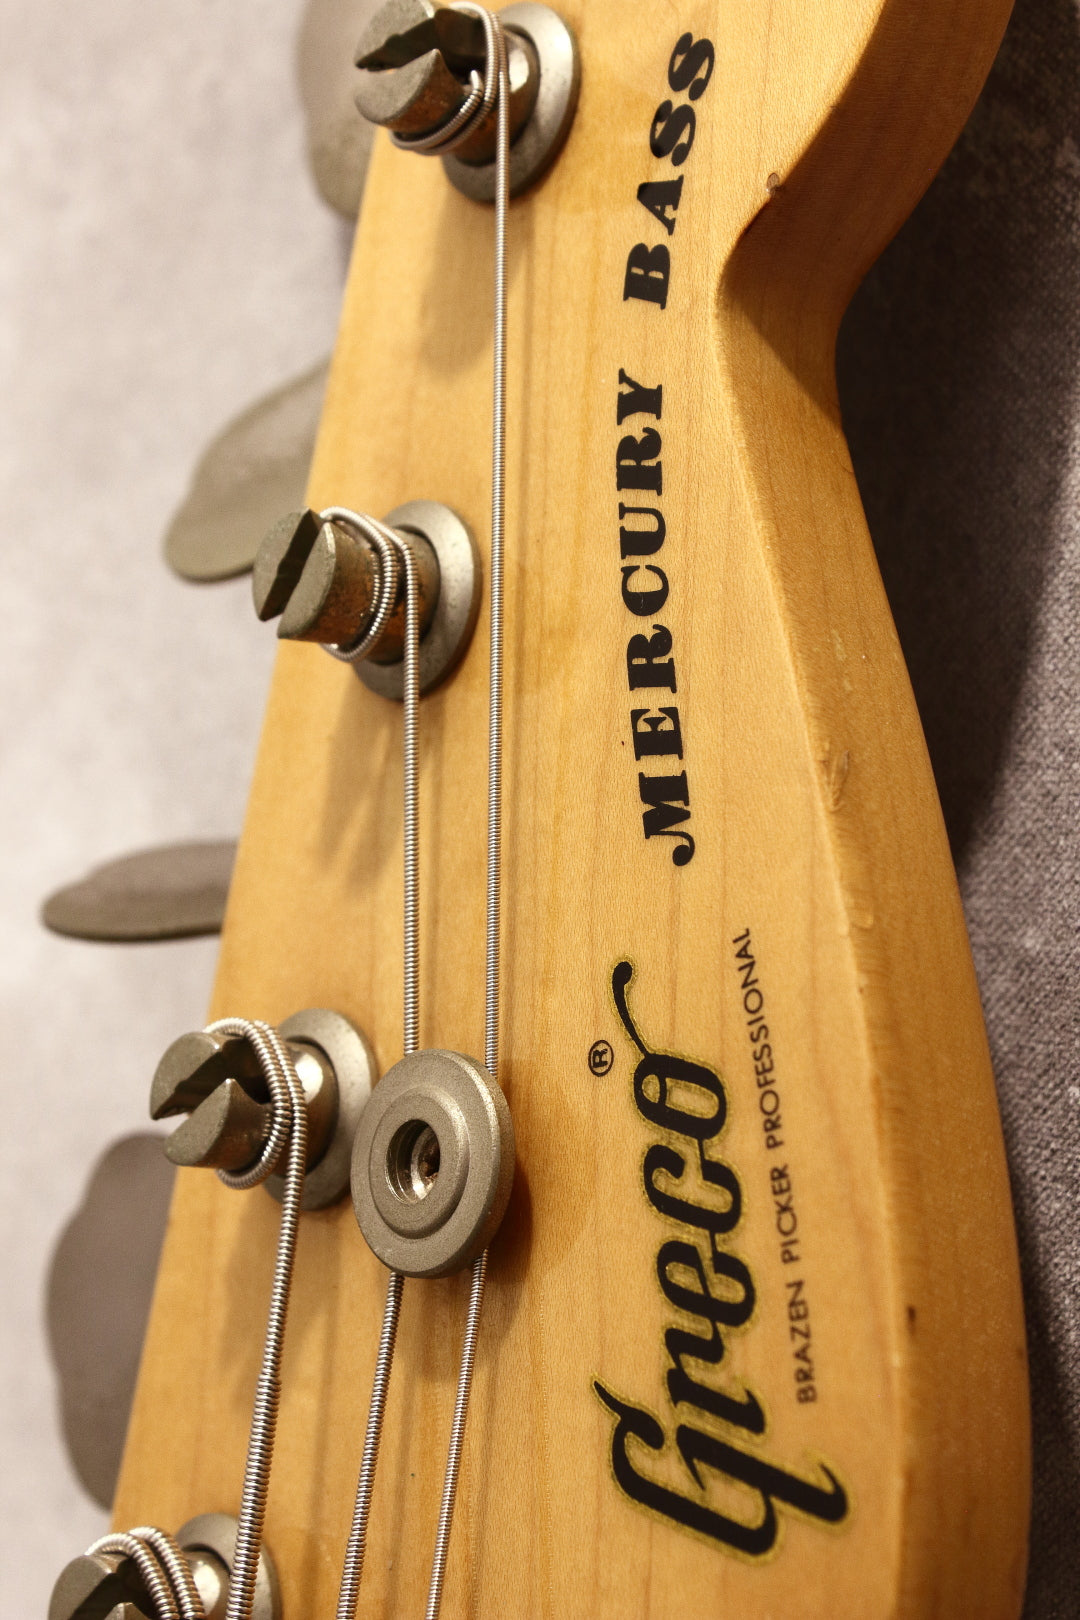 Greco PB580 Mercury Bass Sunburst 1977